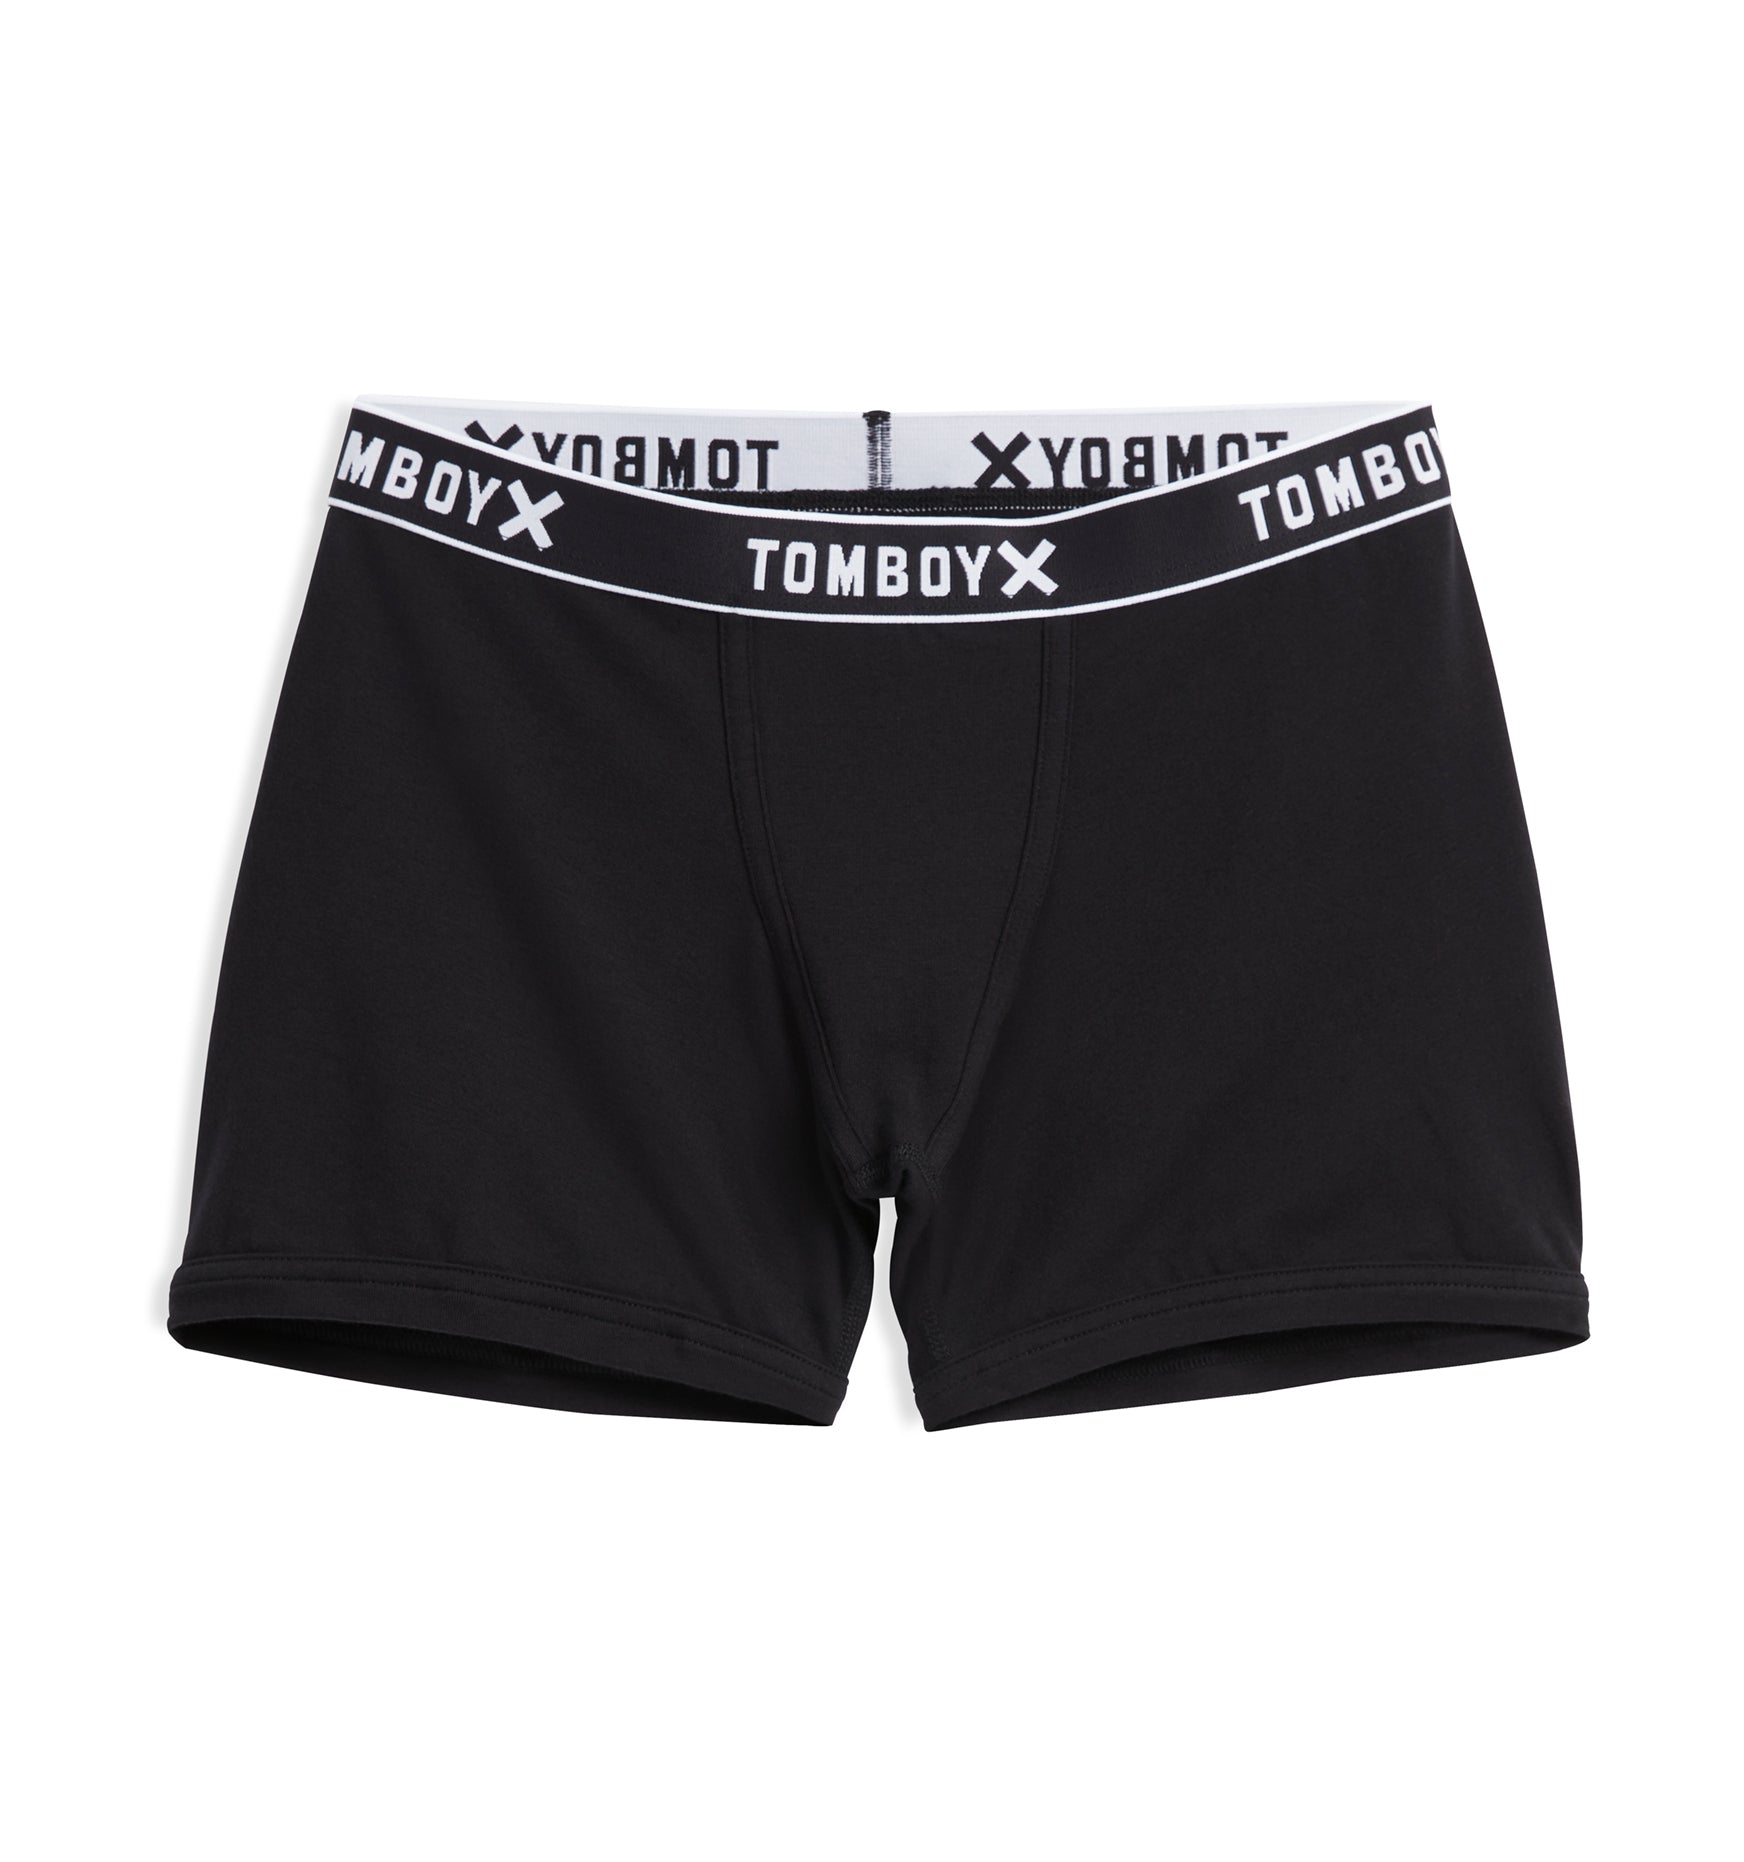 Charcoal Grey Tomboy Boxer Brief Underwear